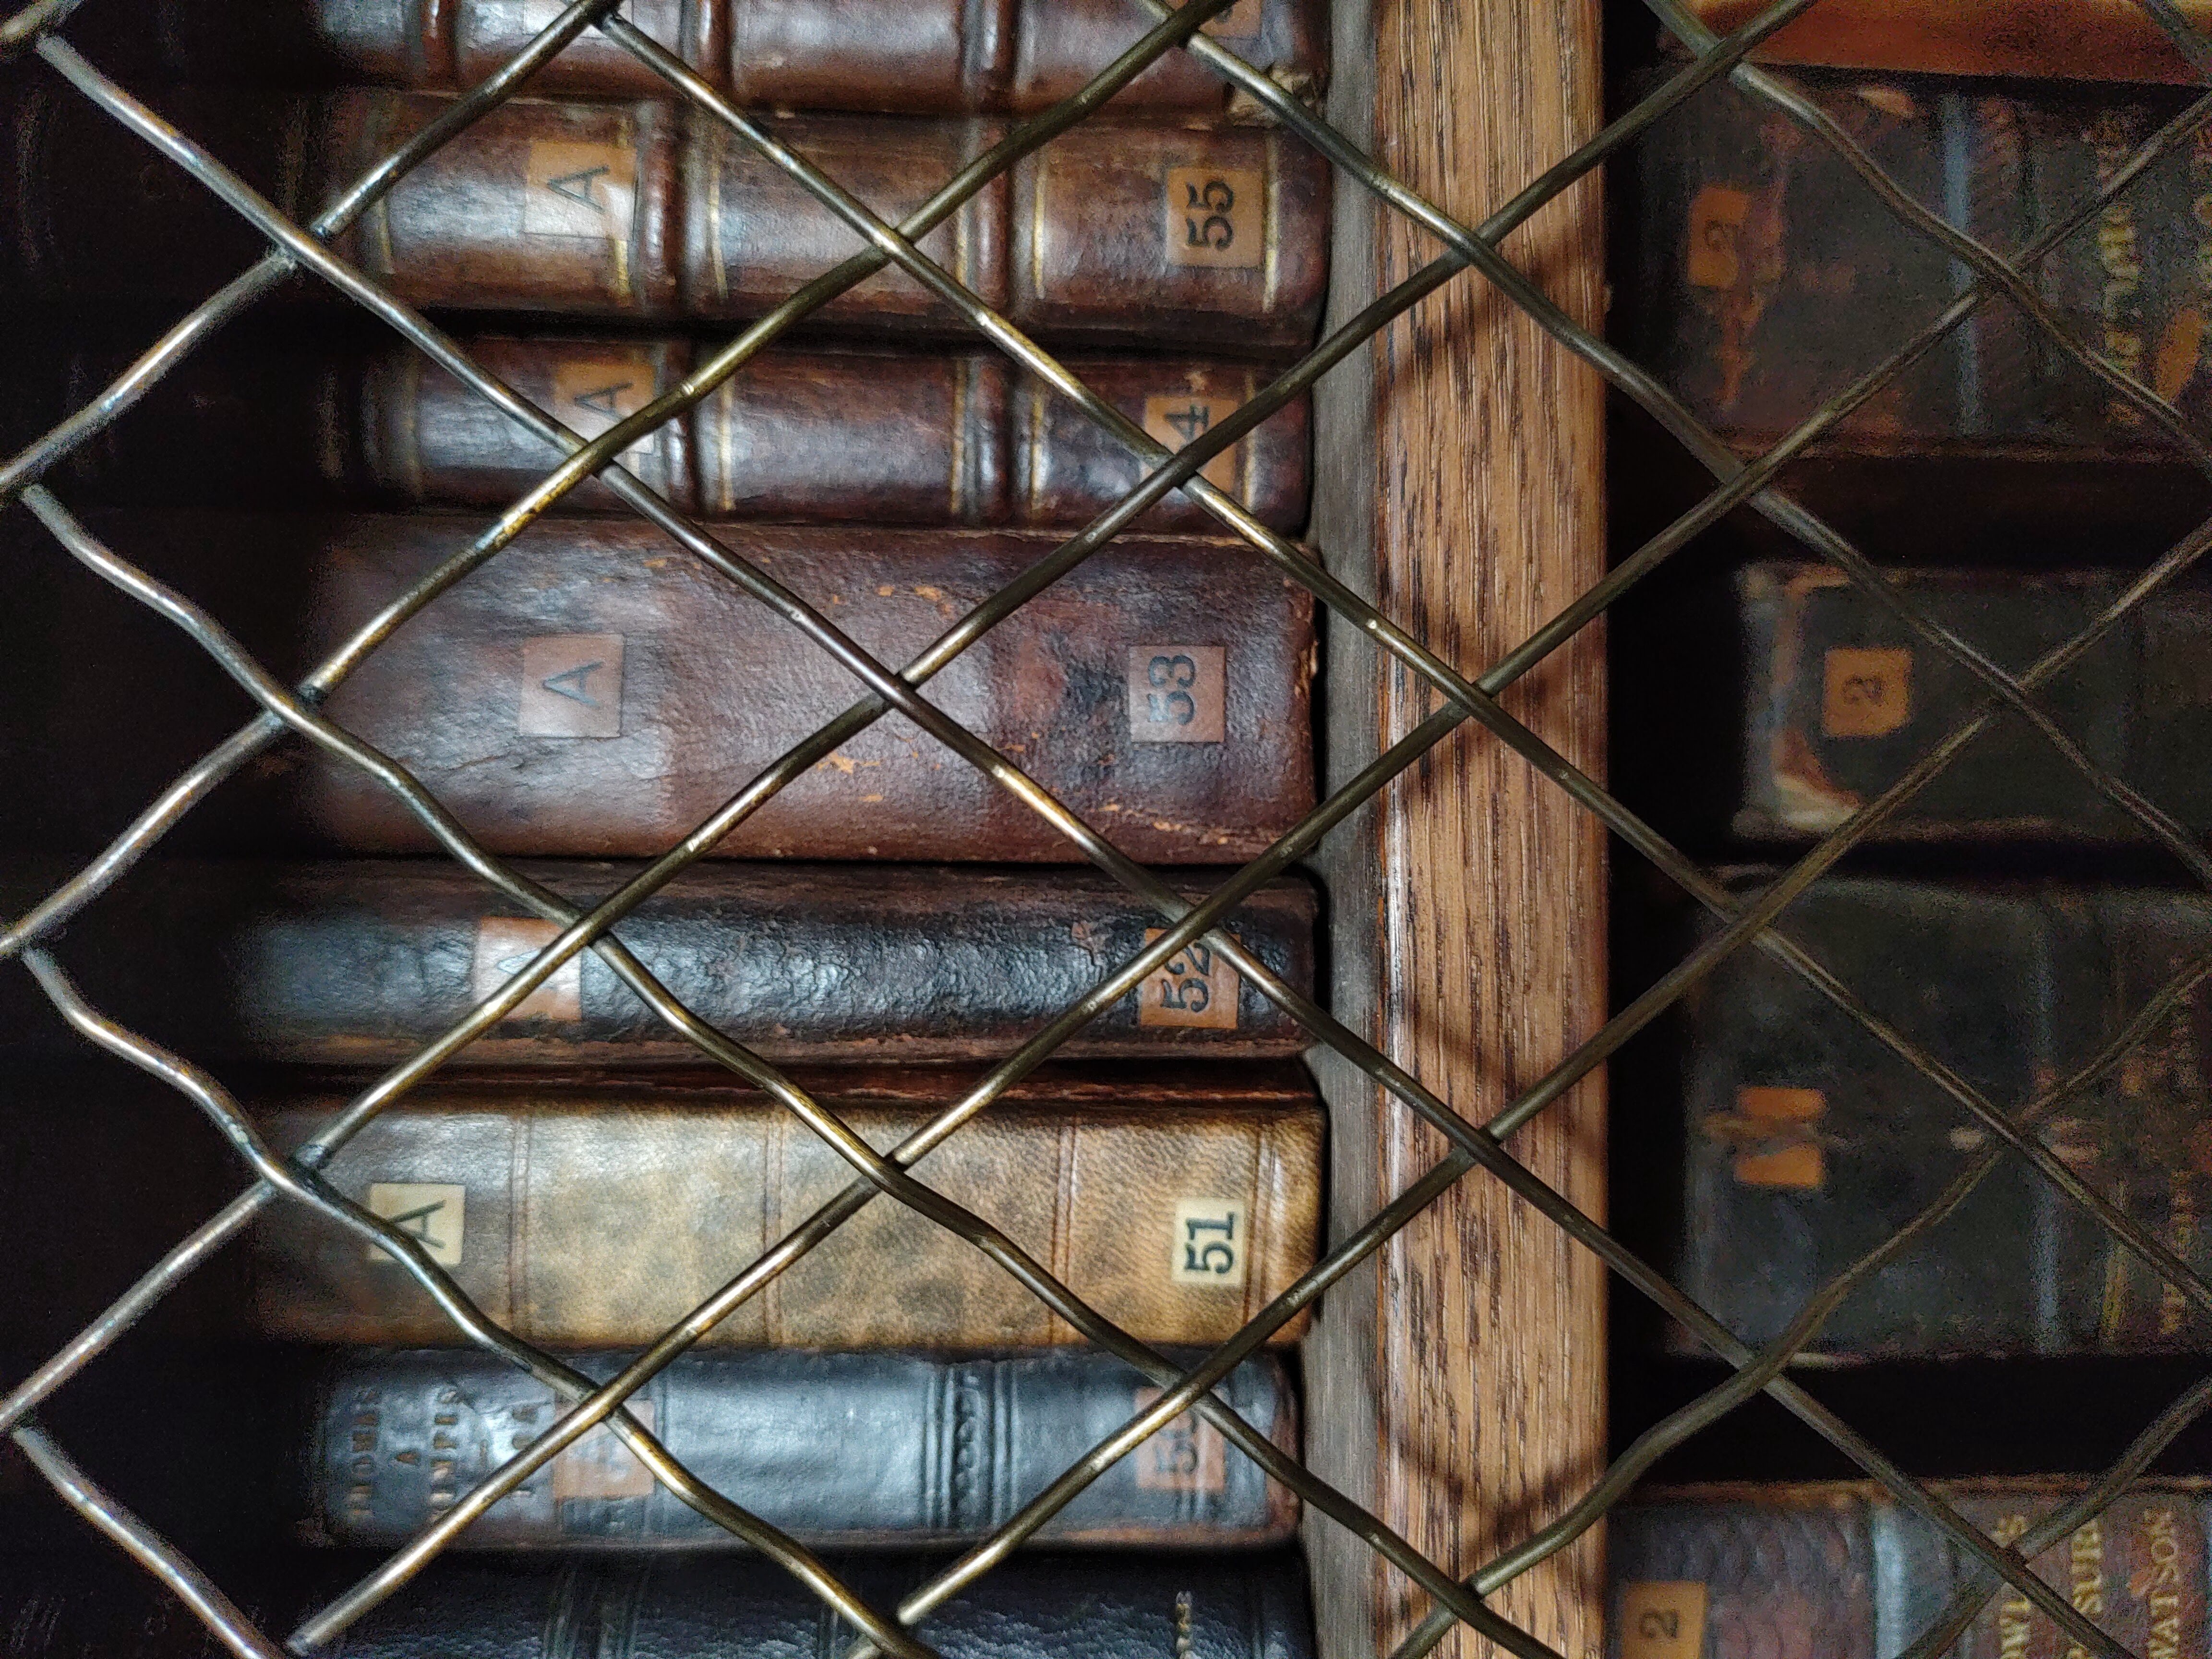 A shelf of books inside a metal cage.